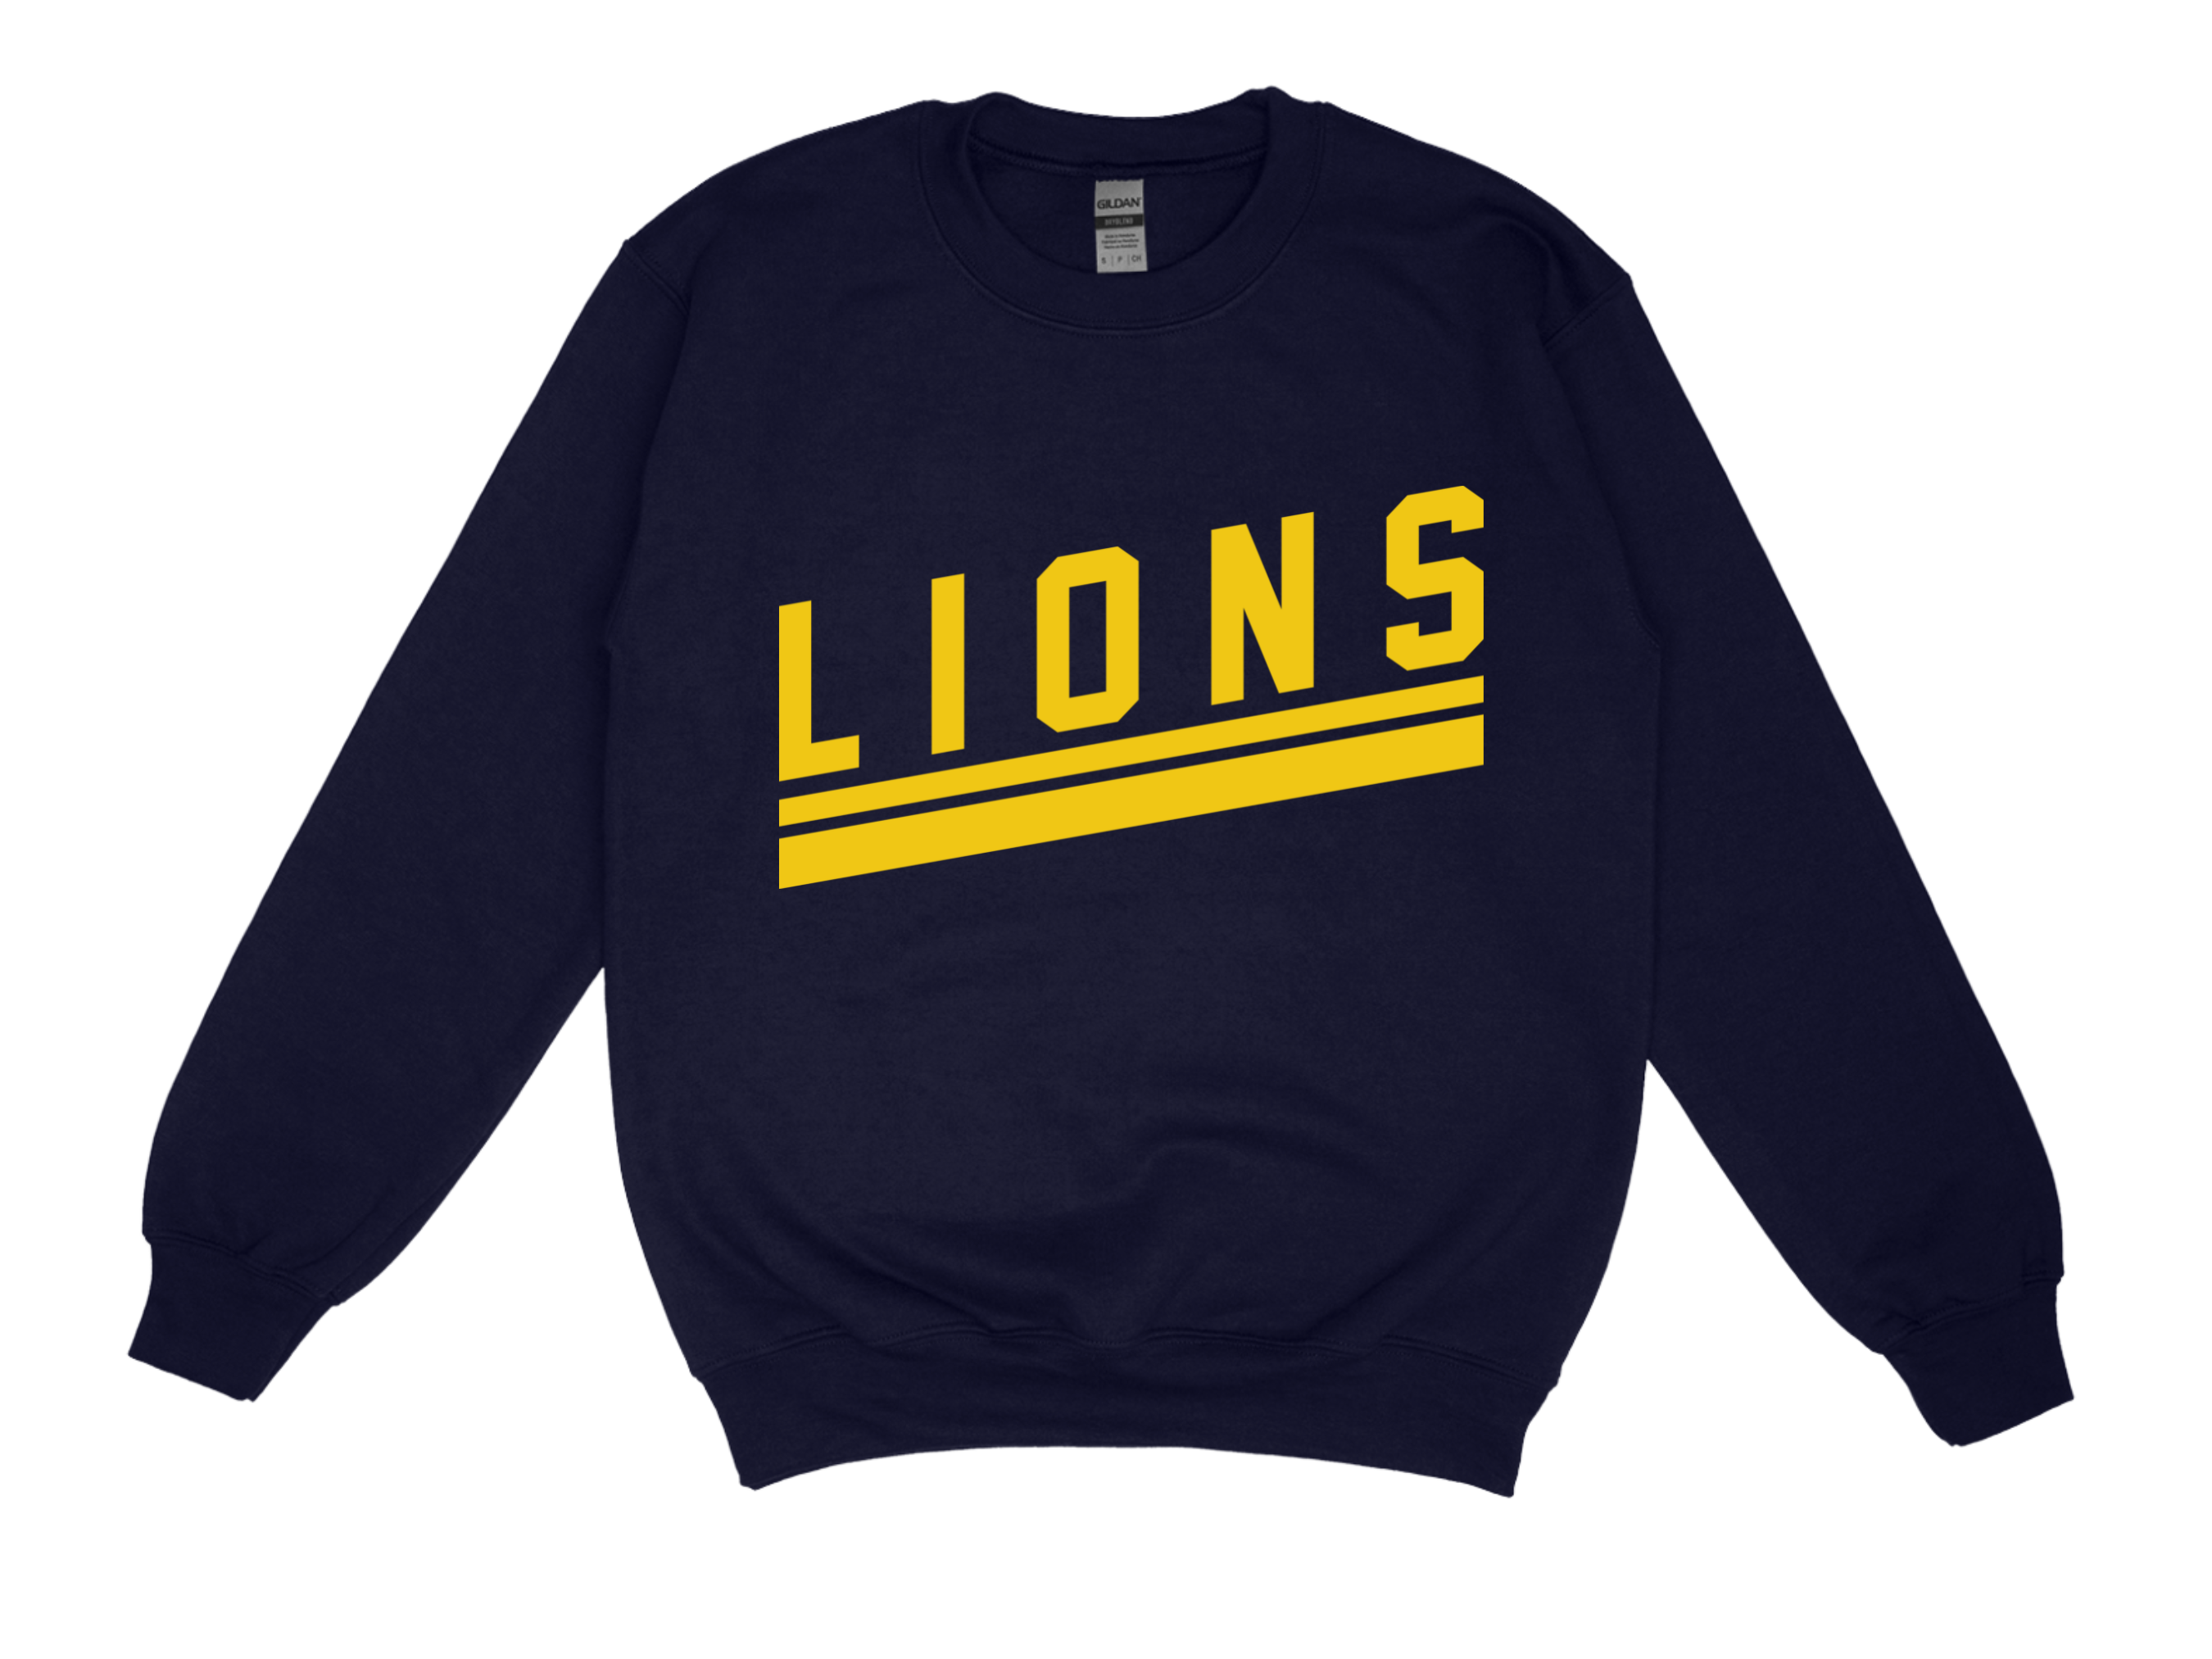 Lions_ - Navy Sweatshirt Large Image